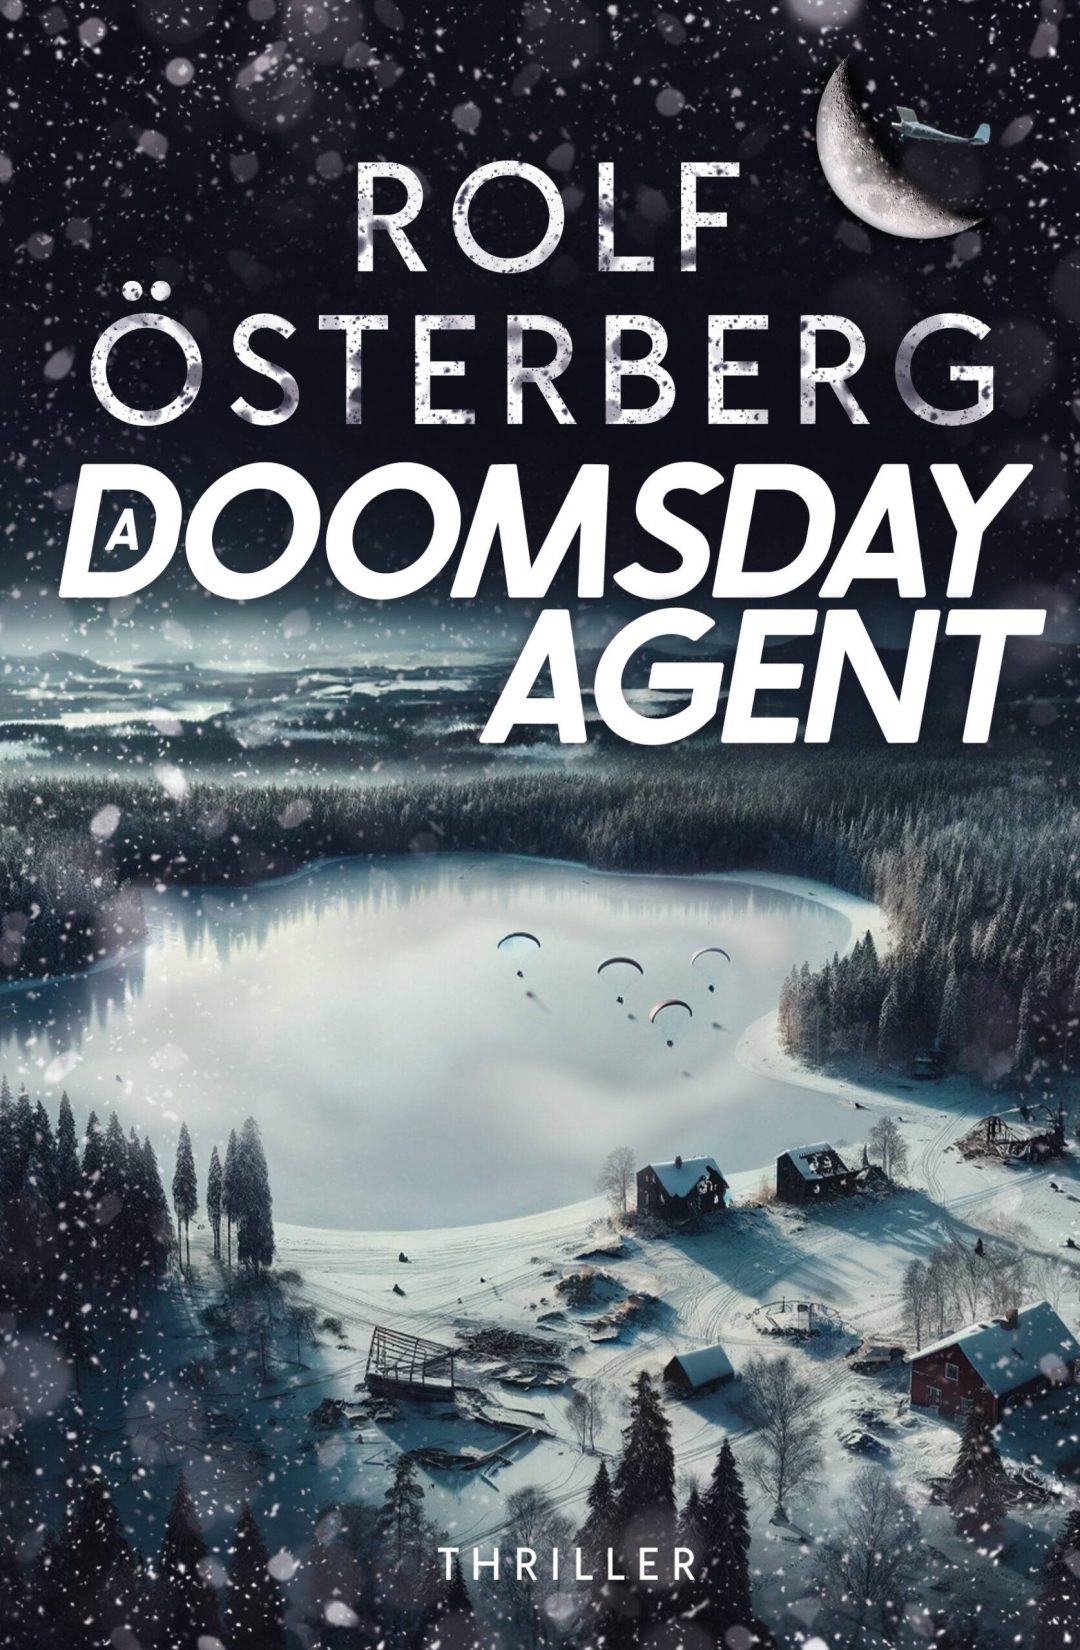 A Doomsday Agent